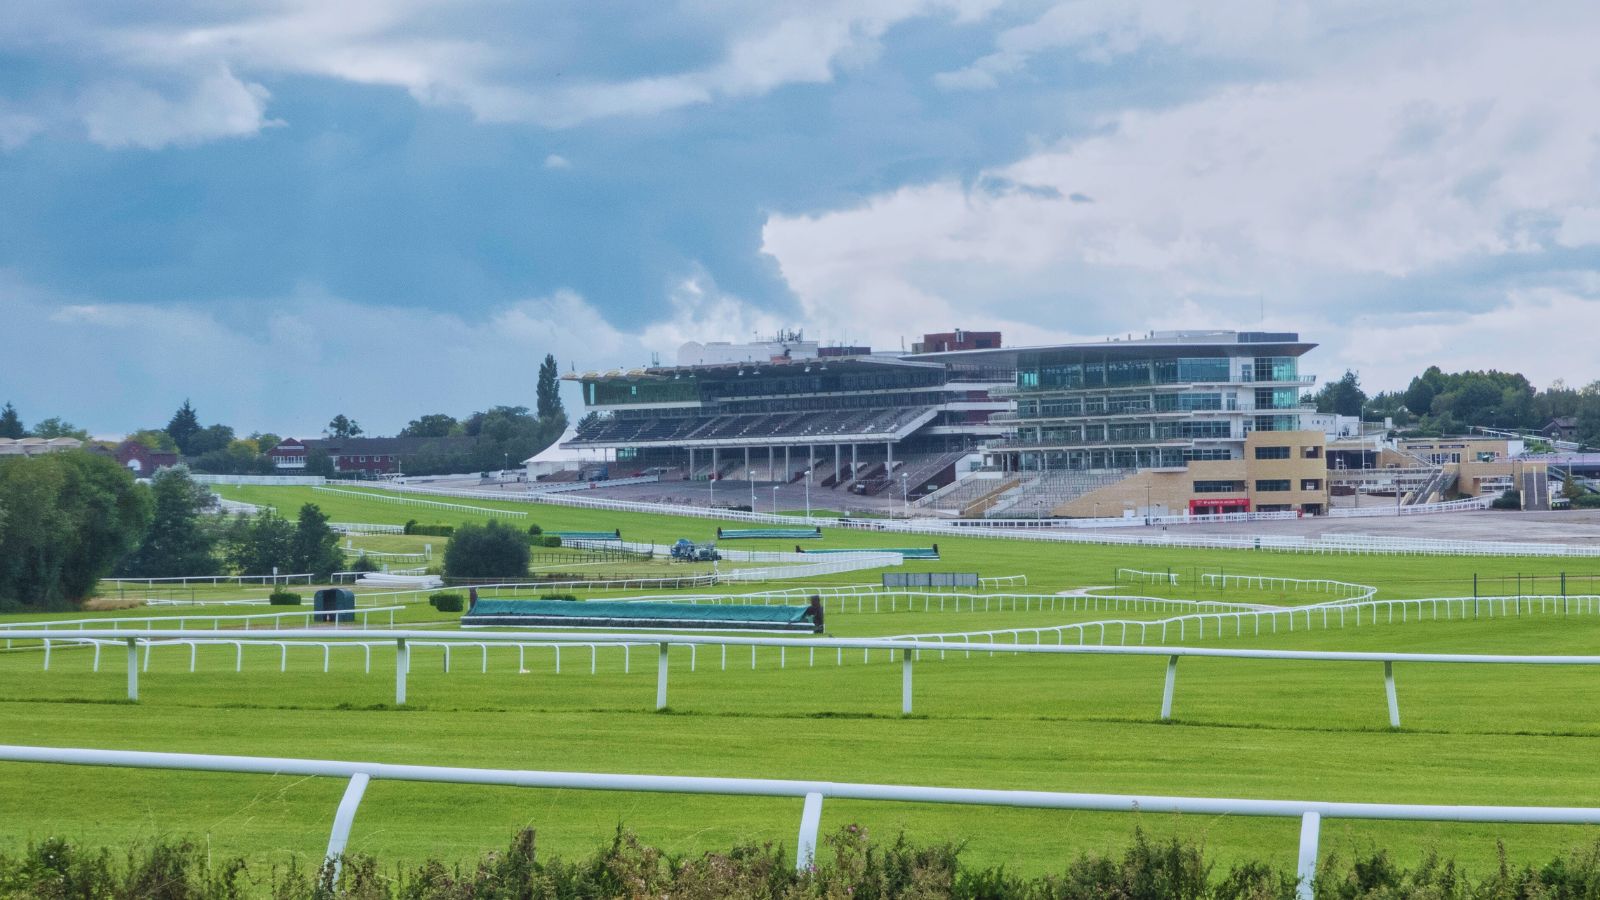 A view of Cheltenham racecourse